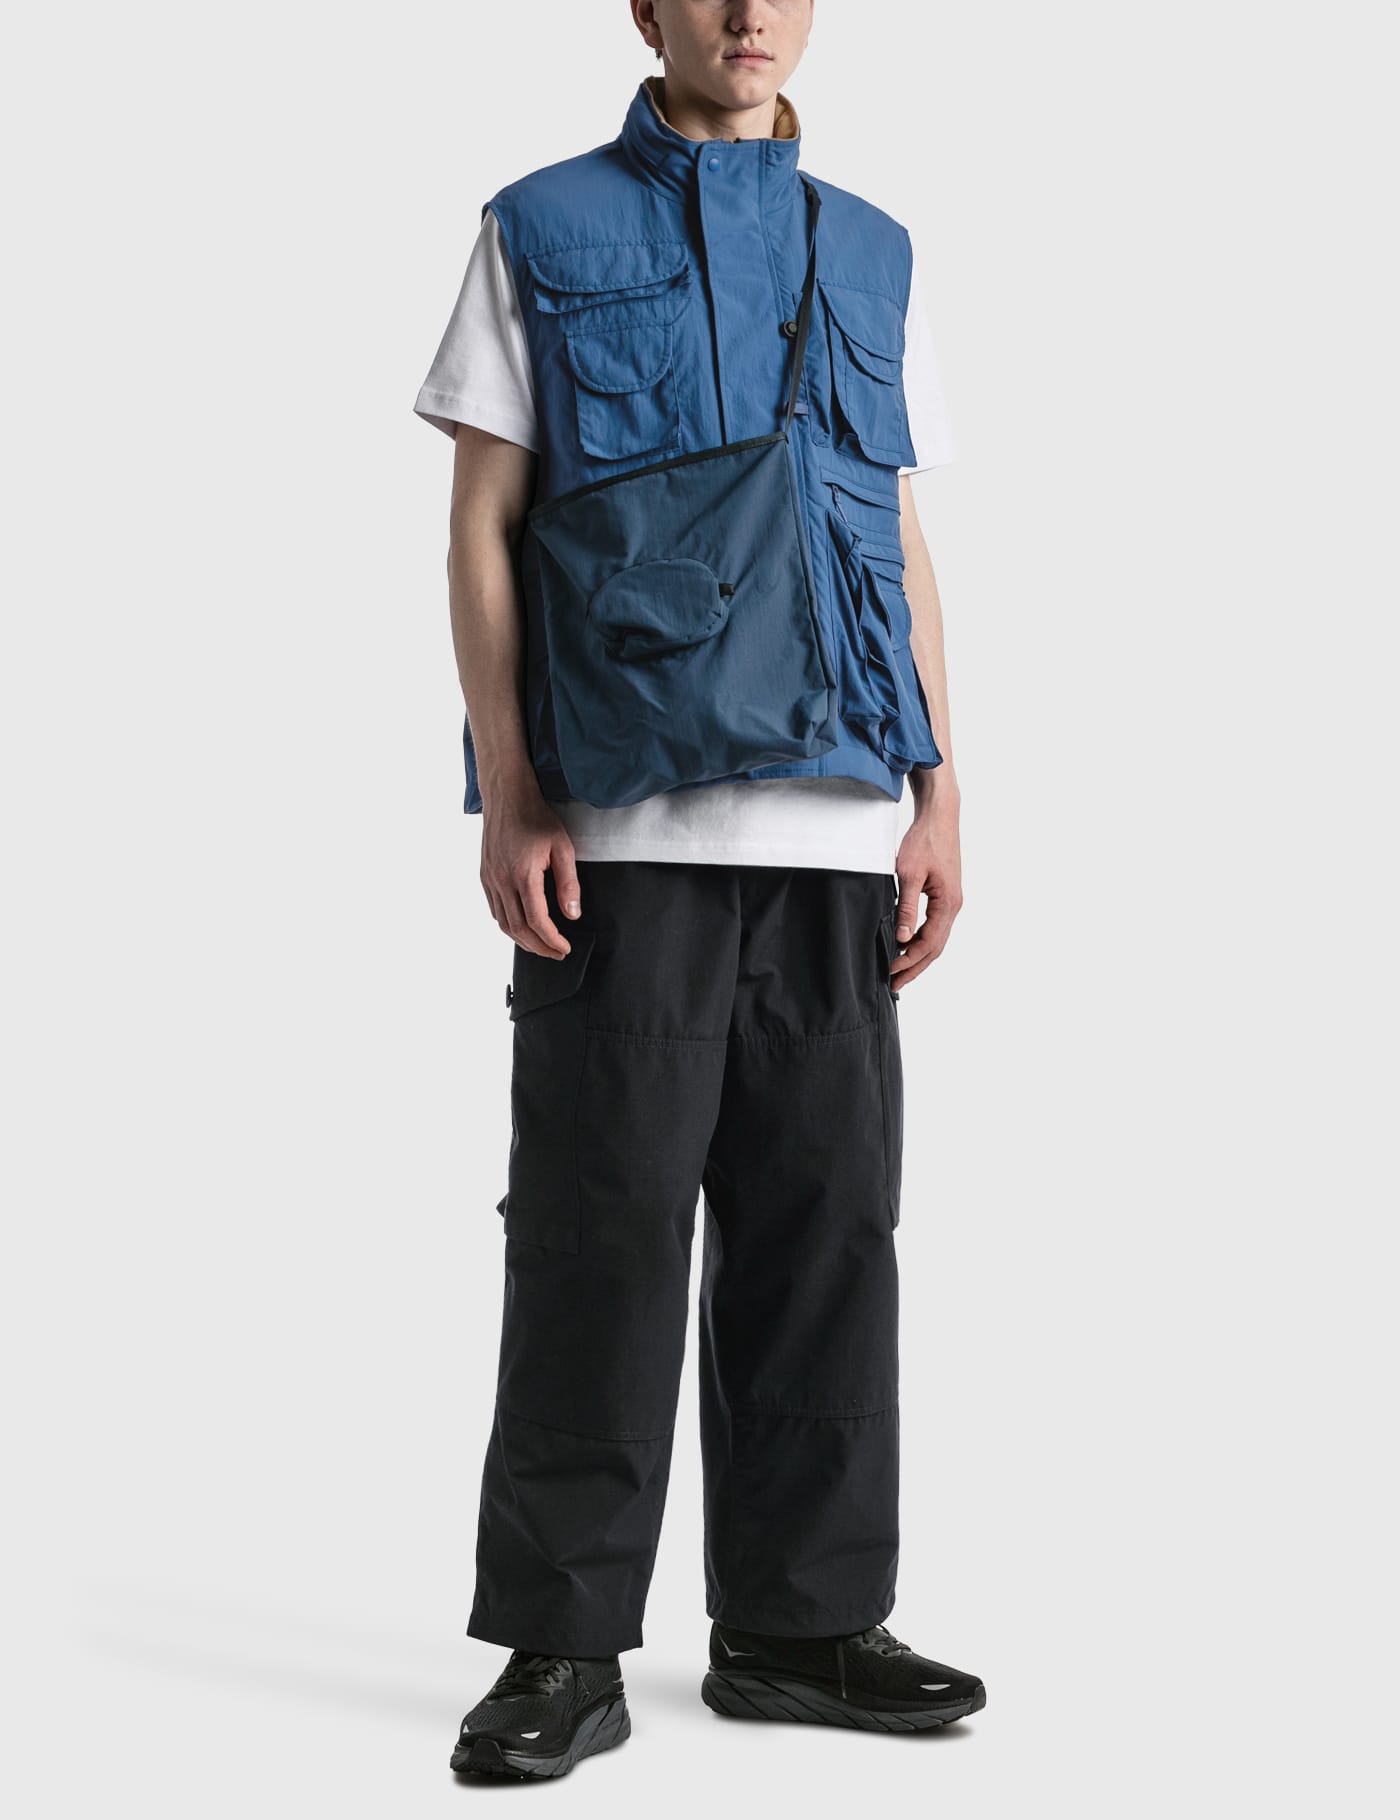 DAIWA PIER39 - Tech Parfect Fishing Vest | HBX - Globally Curated 